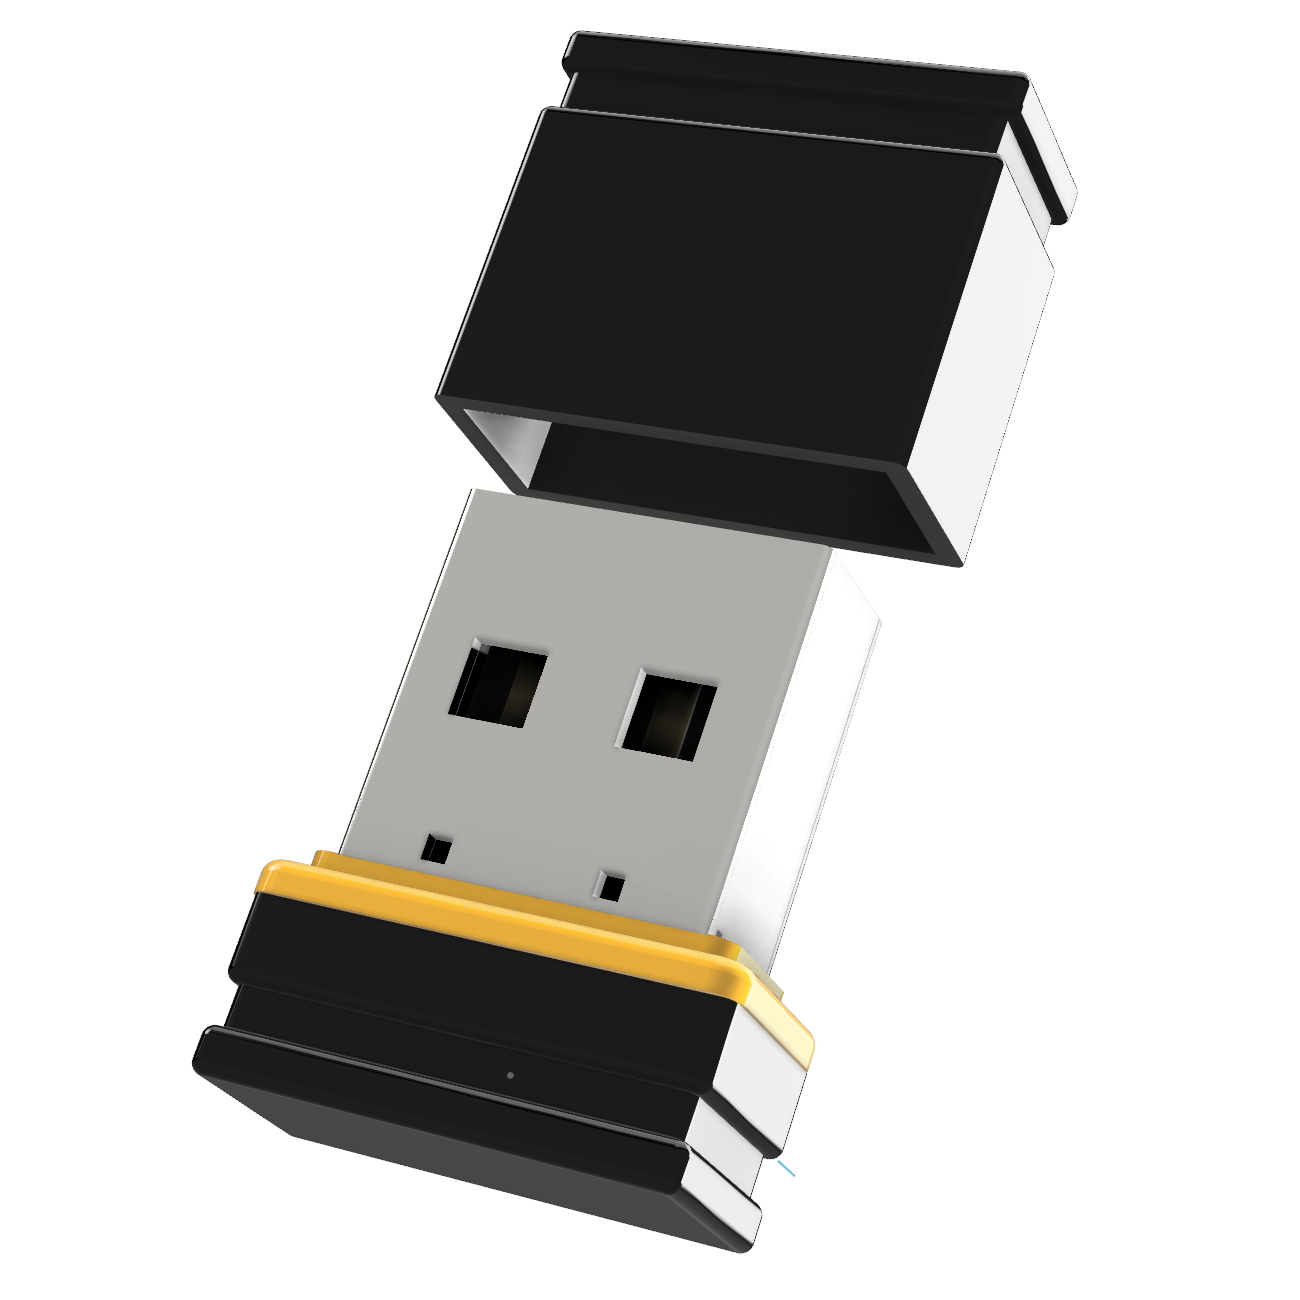 GB) USB-Stick Mini 16 (Schwarz/Gelb, USB P1 GERMANY ®ULTRA